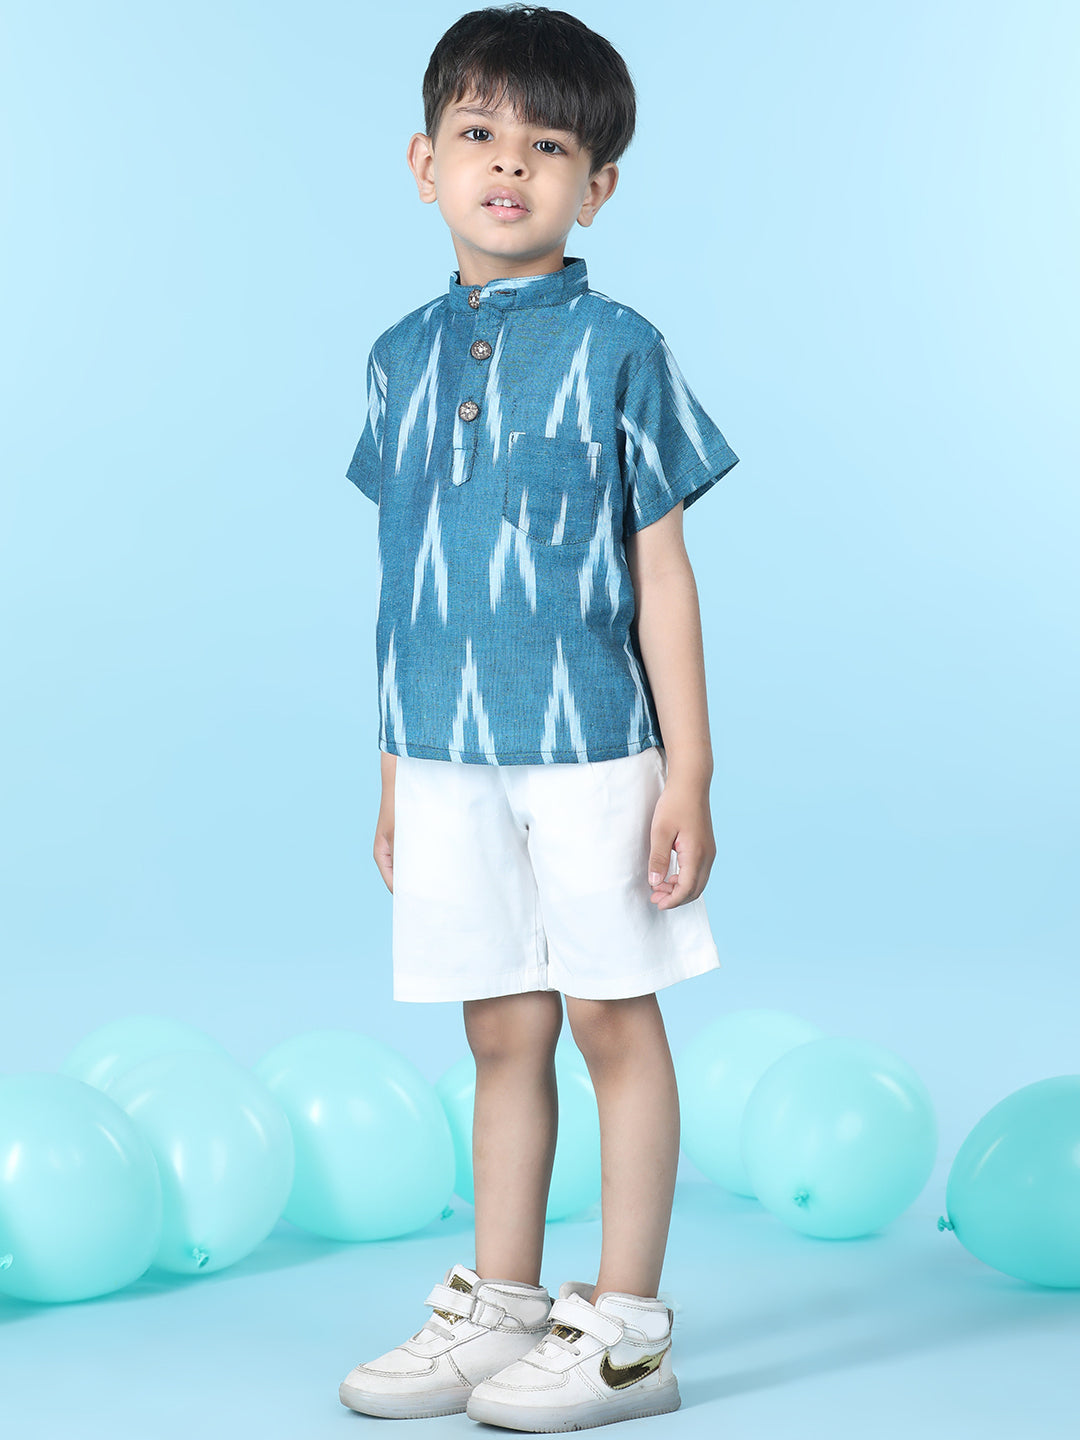 Cutiekins Boys Abstract Print T-Shirt With Solid Lycra Short -Ocean Blue & White